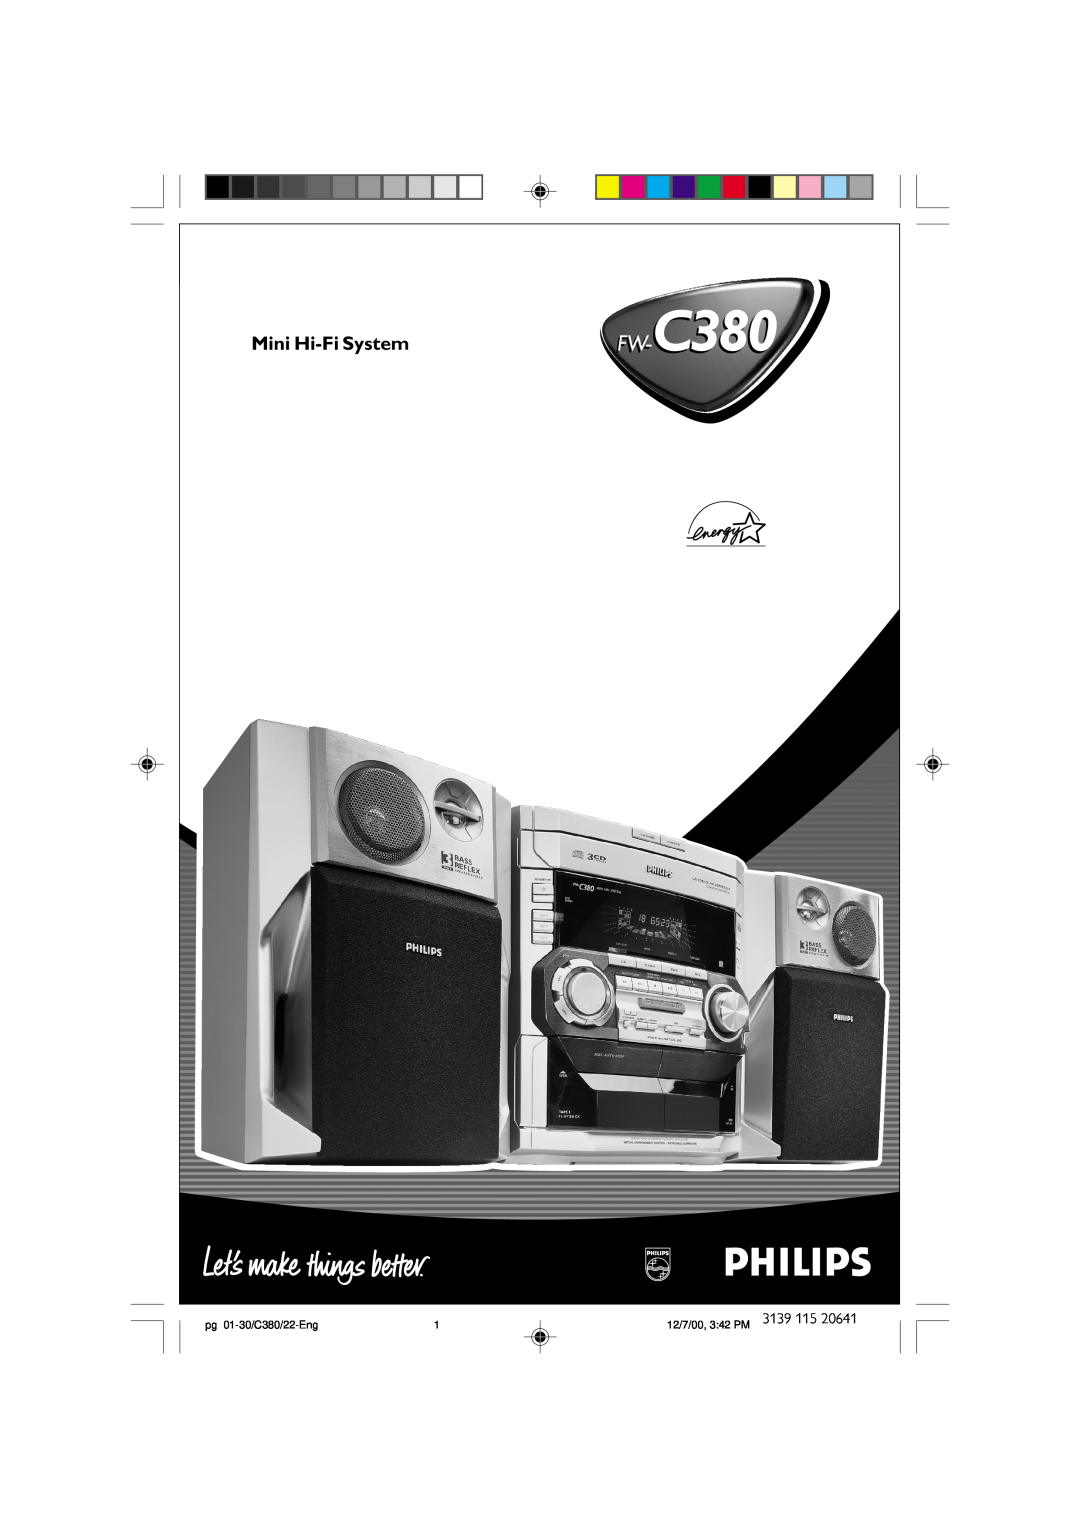 Philips FW-C380 manual Mini Hi-FiSystem, pg 01-30/C380/22-Eng, 12/7/00, 3 42 PM 